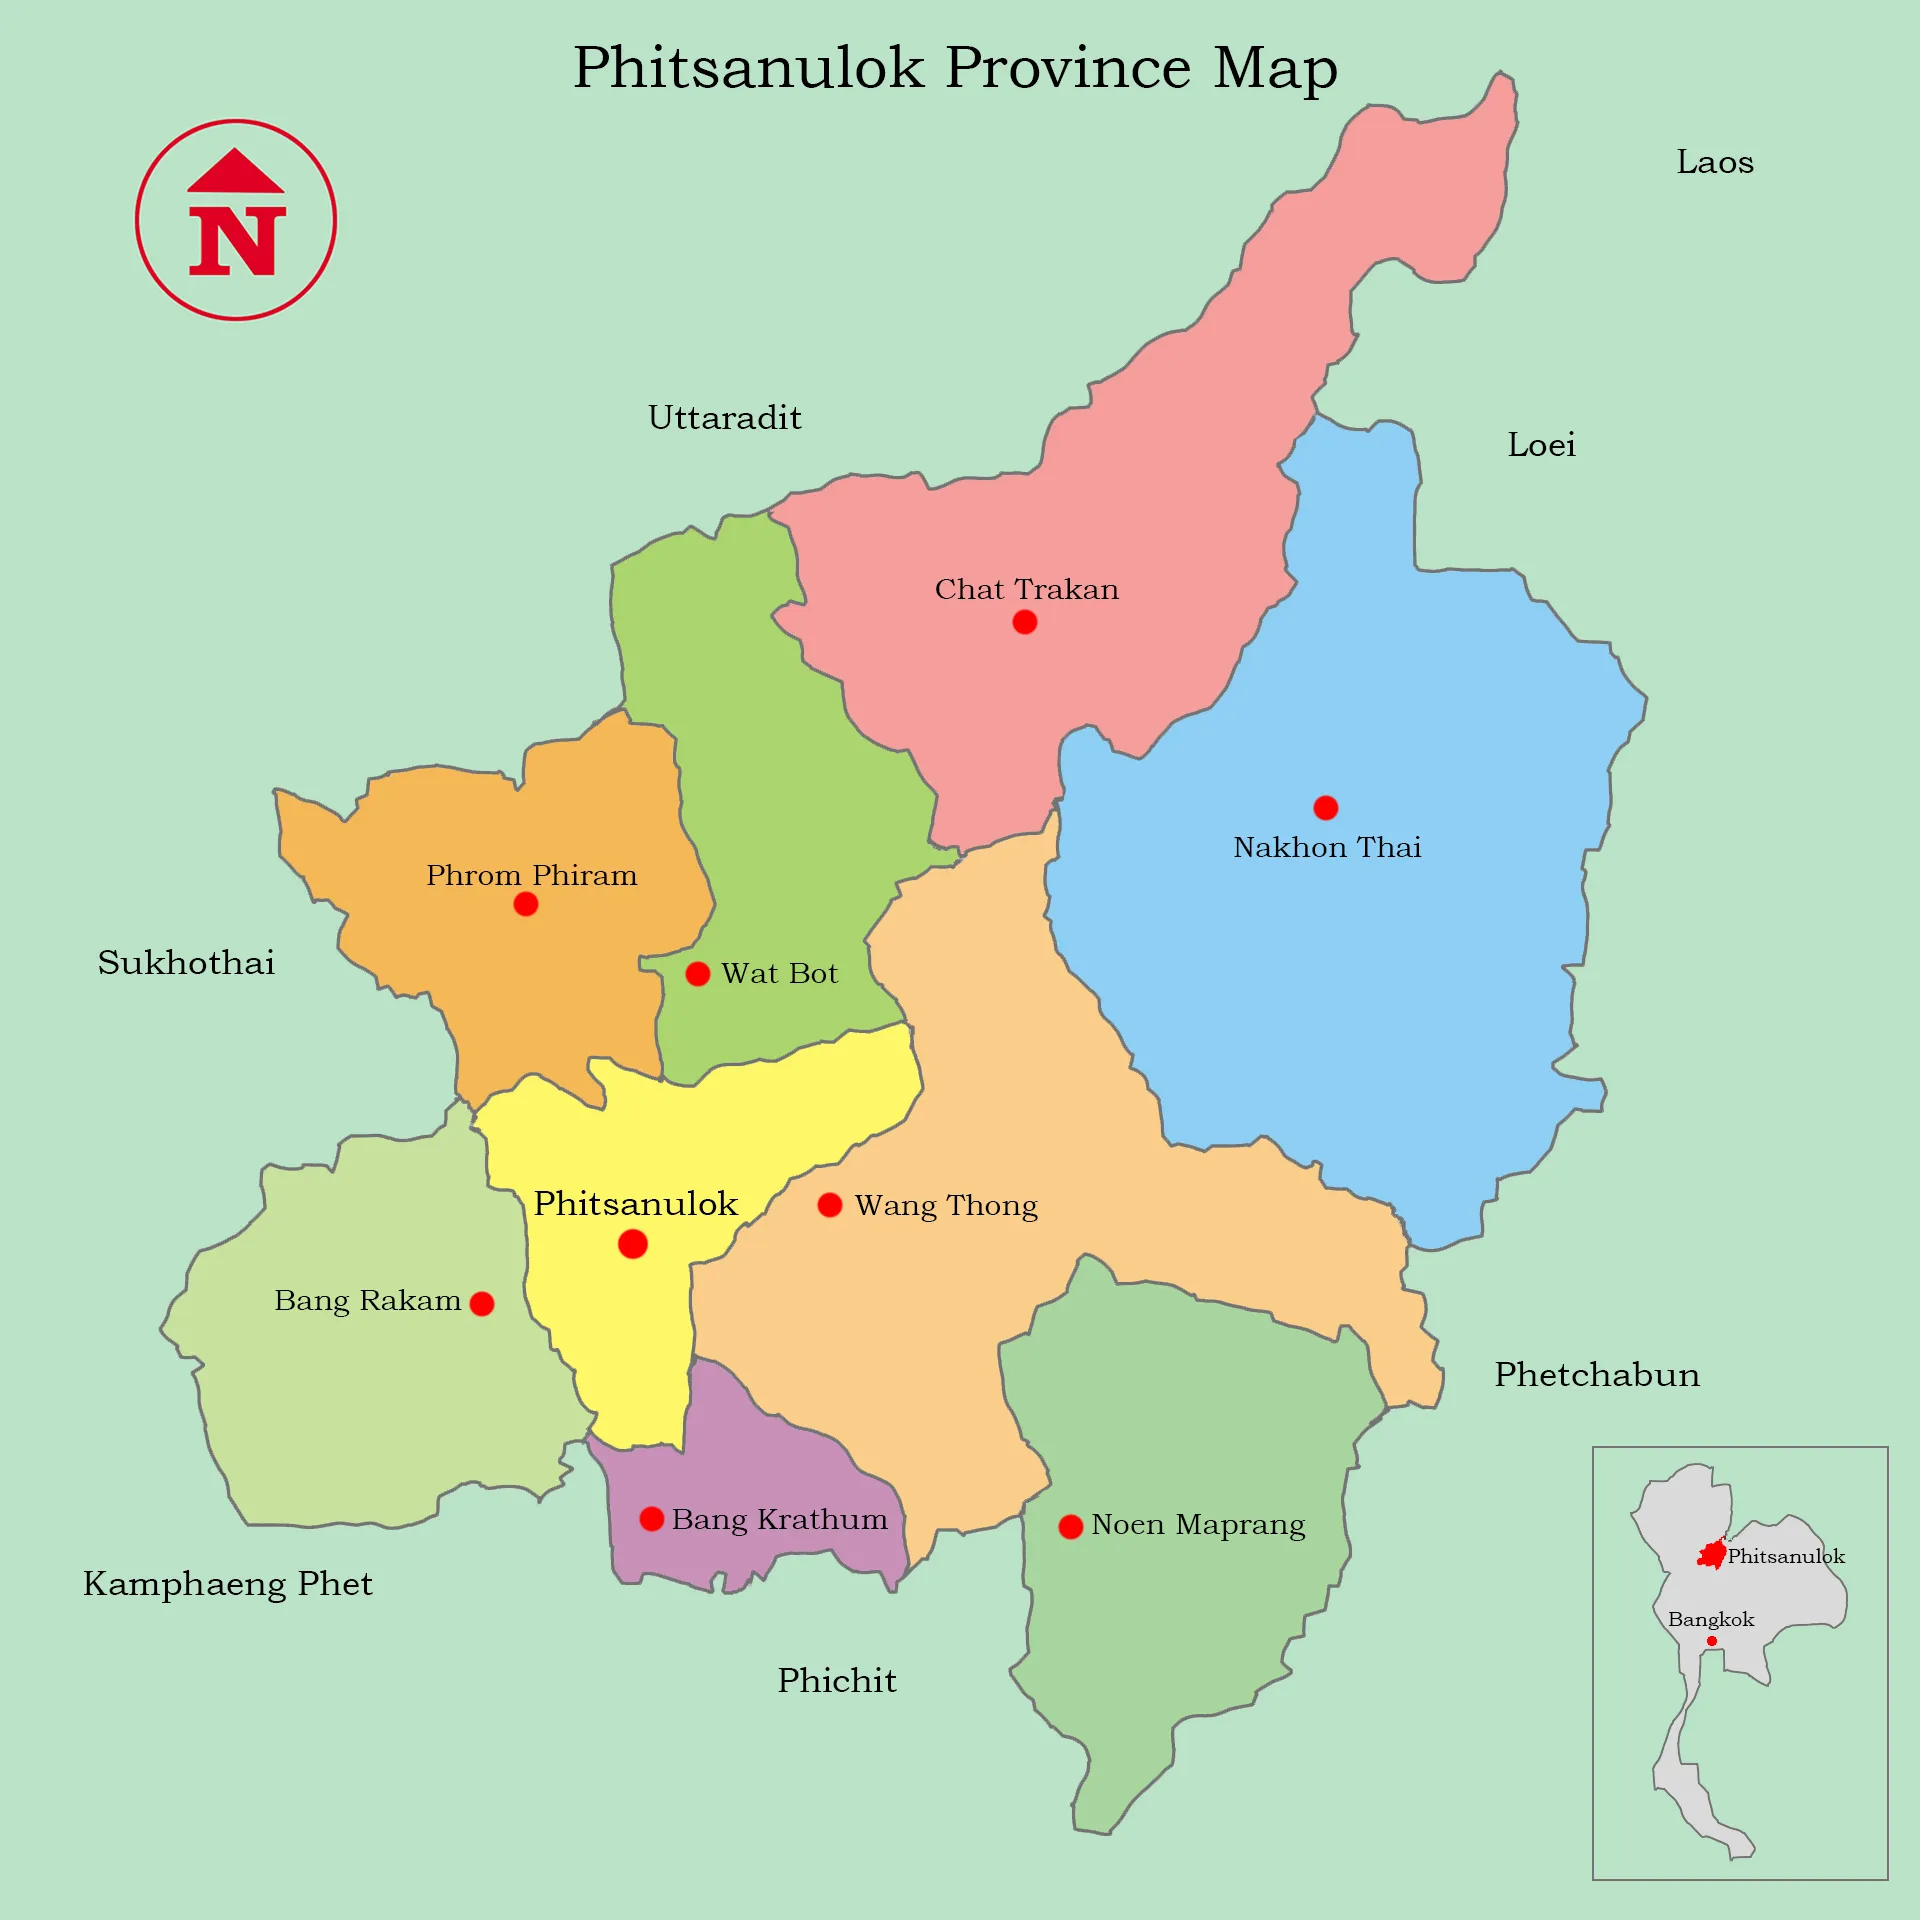 Phitsanulok Province Map